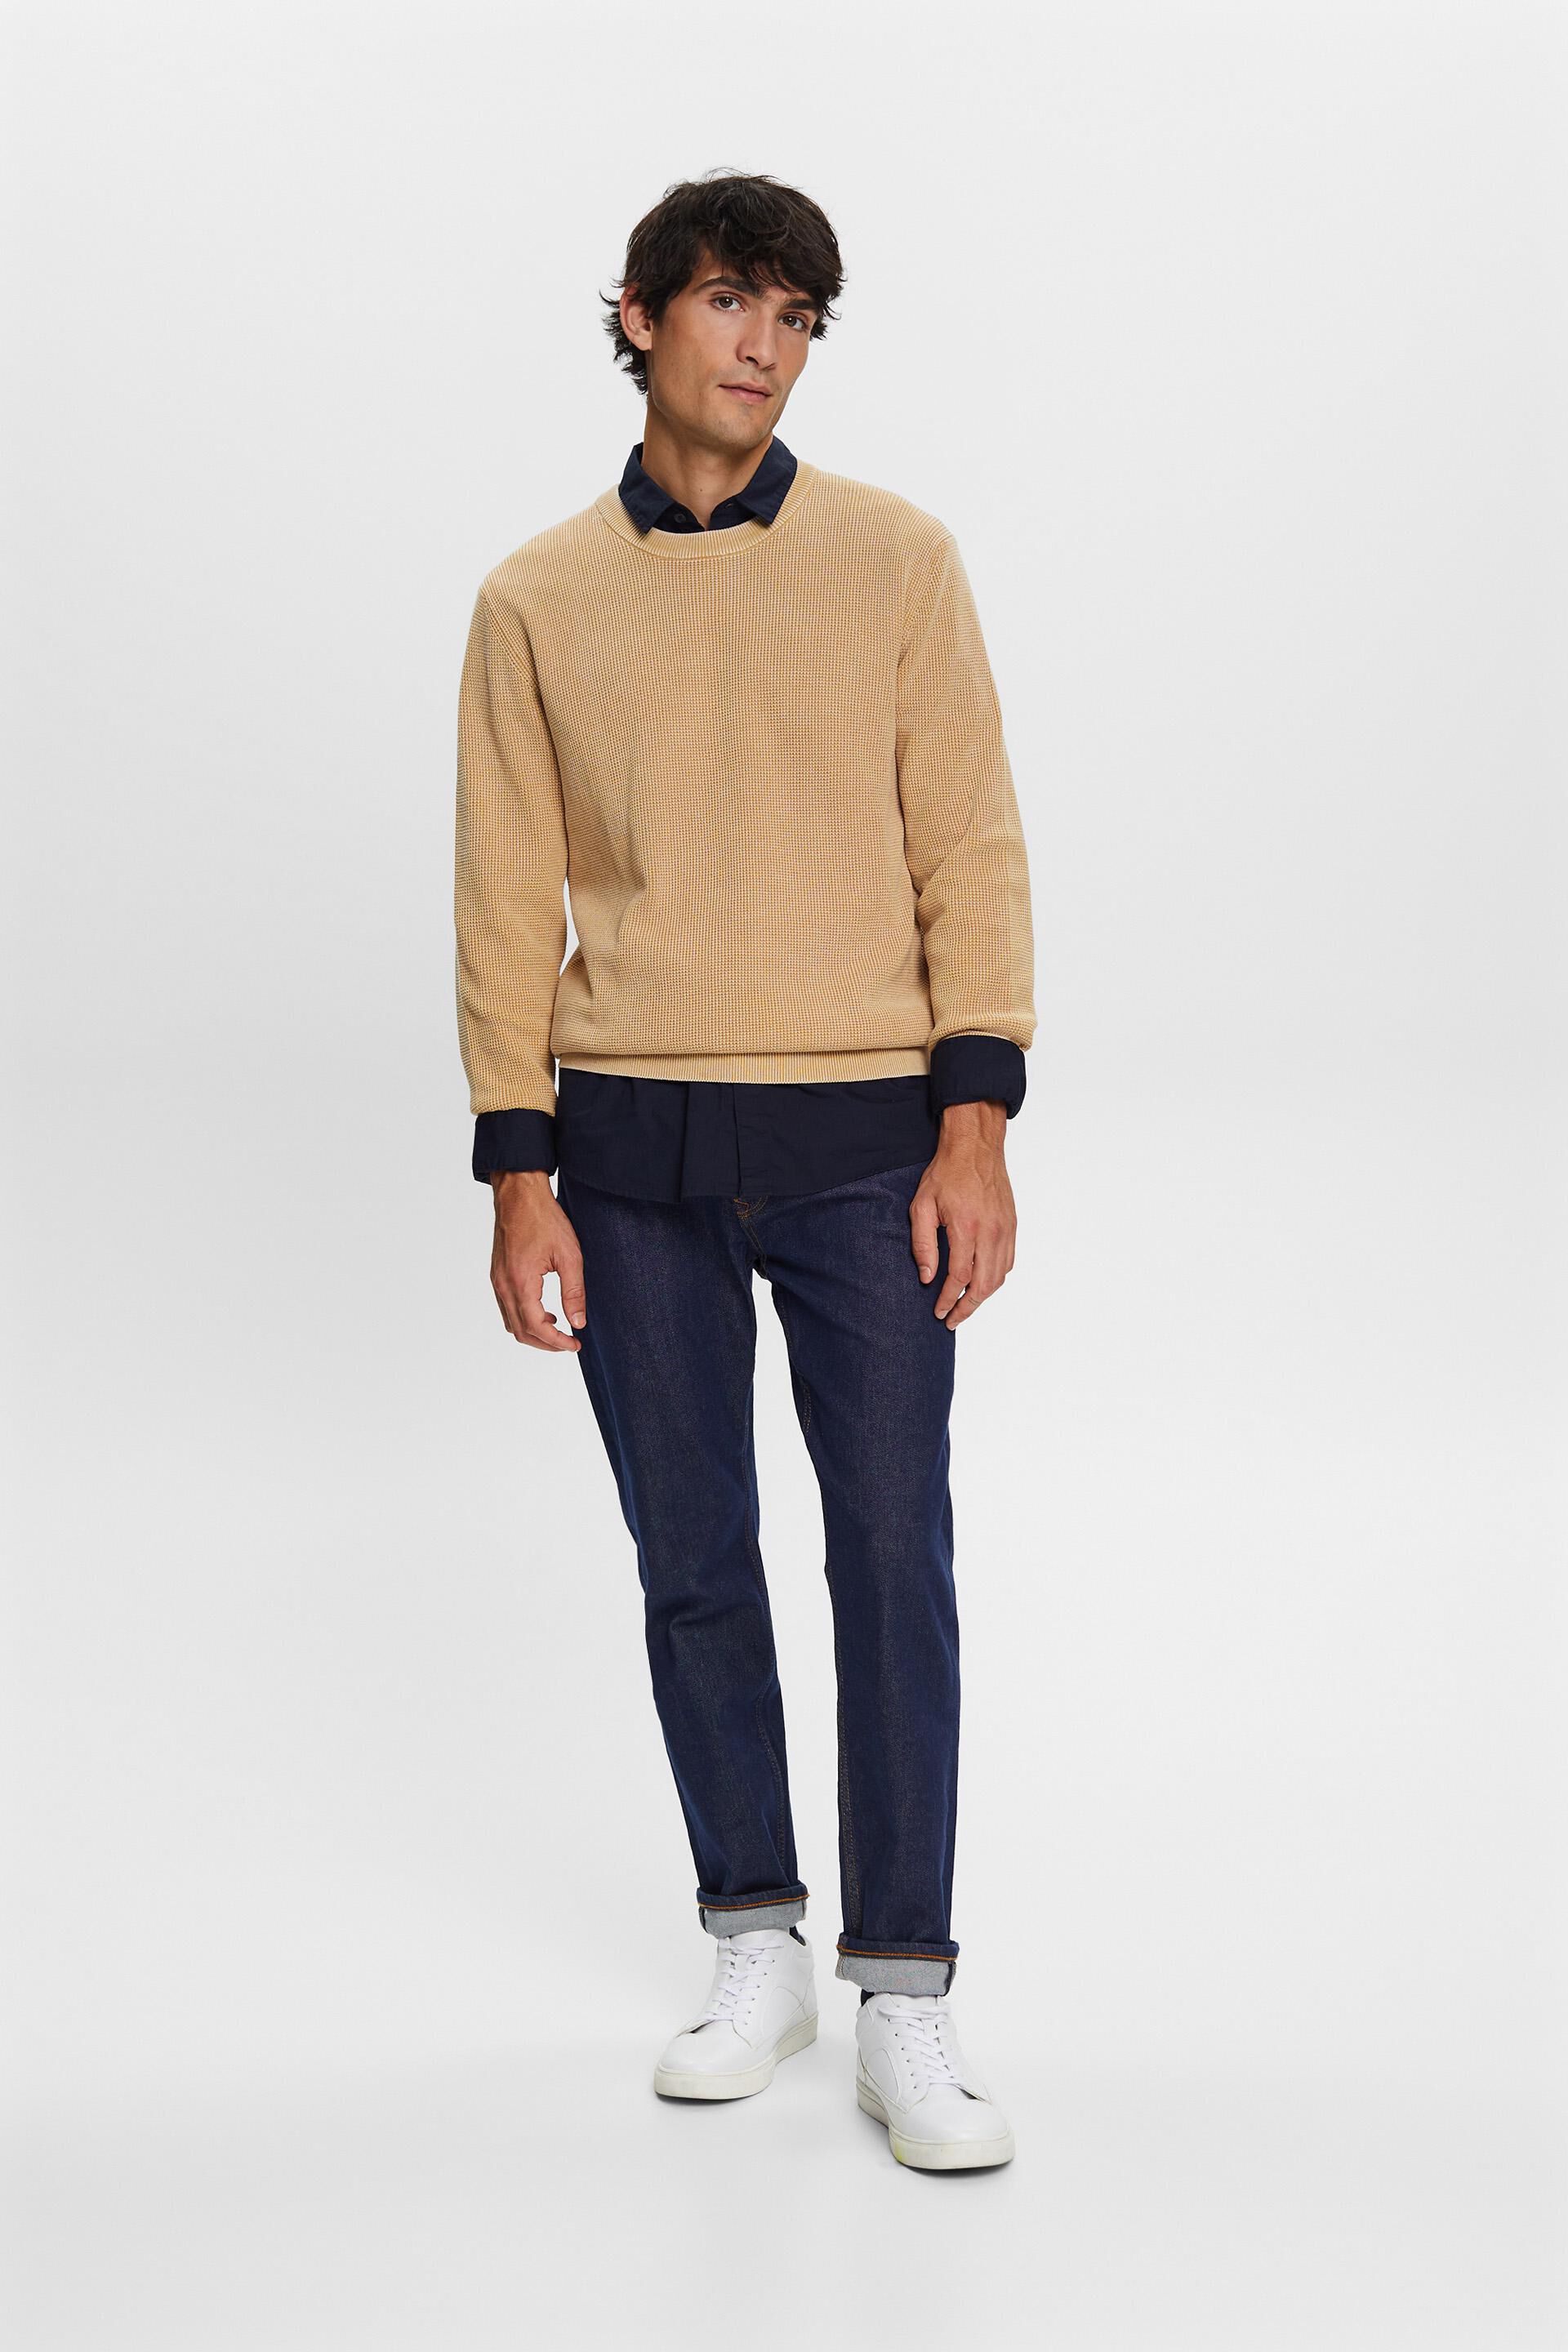 Esprit cotton 100% Basic crewneck jumper,